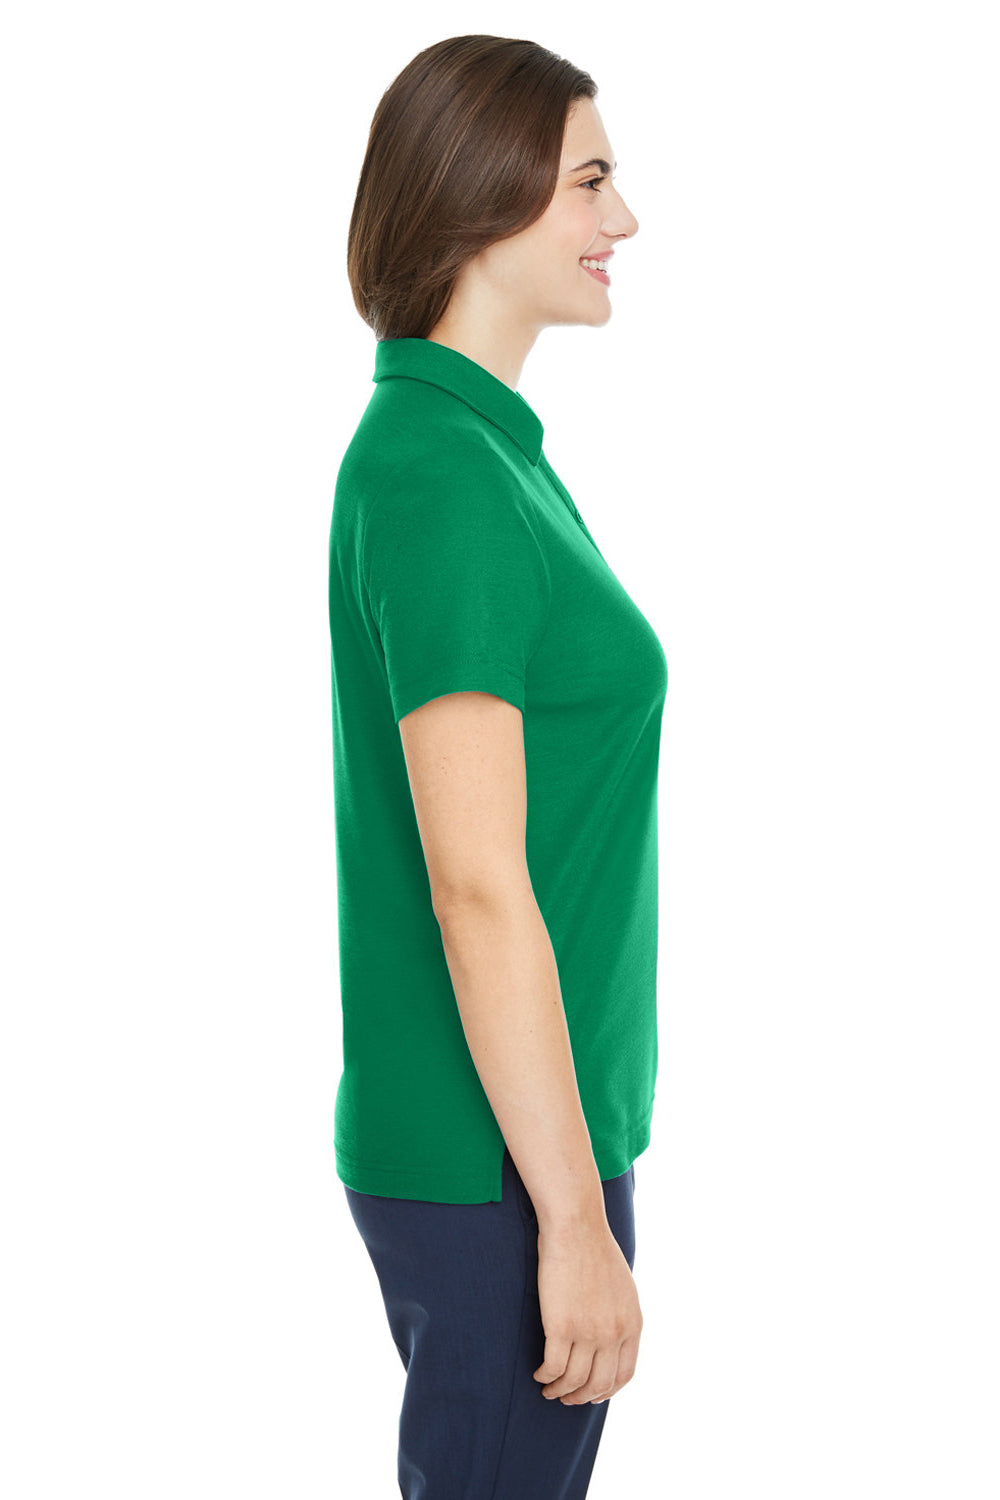 Core 365 CE112W Womens Fusion ChromaSoft Performance Moisture Wicking Pique Short Sleeve Polo Shirt Kelly Green Side